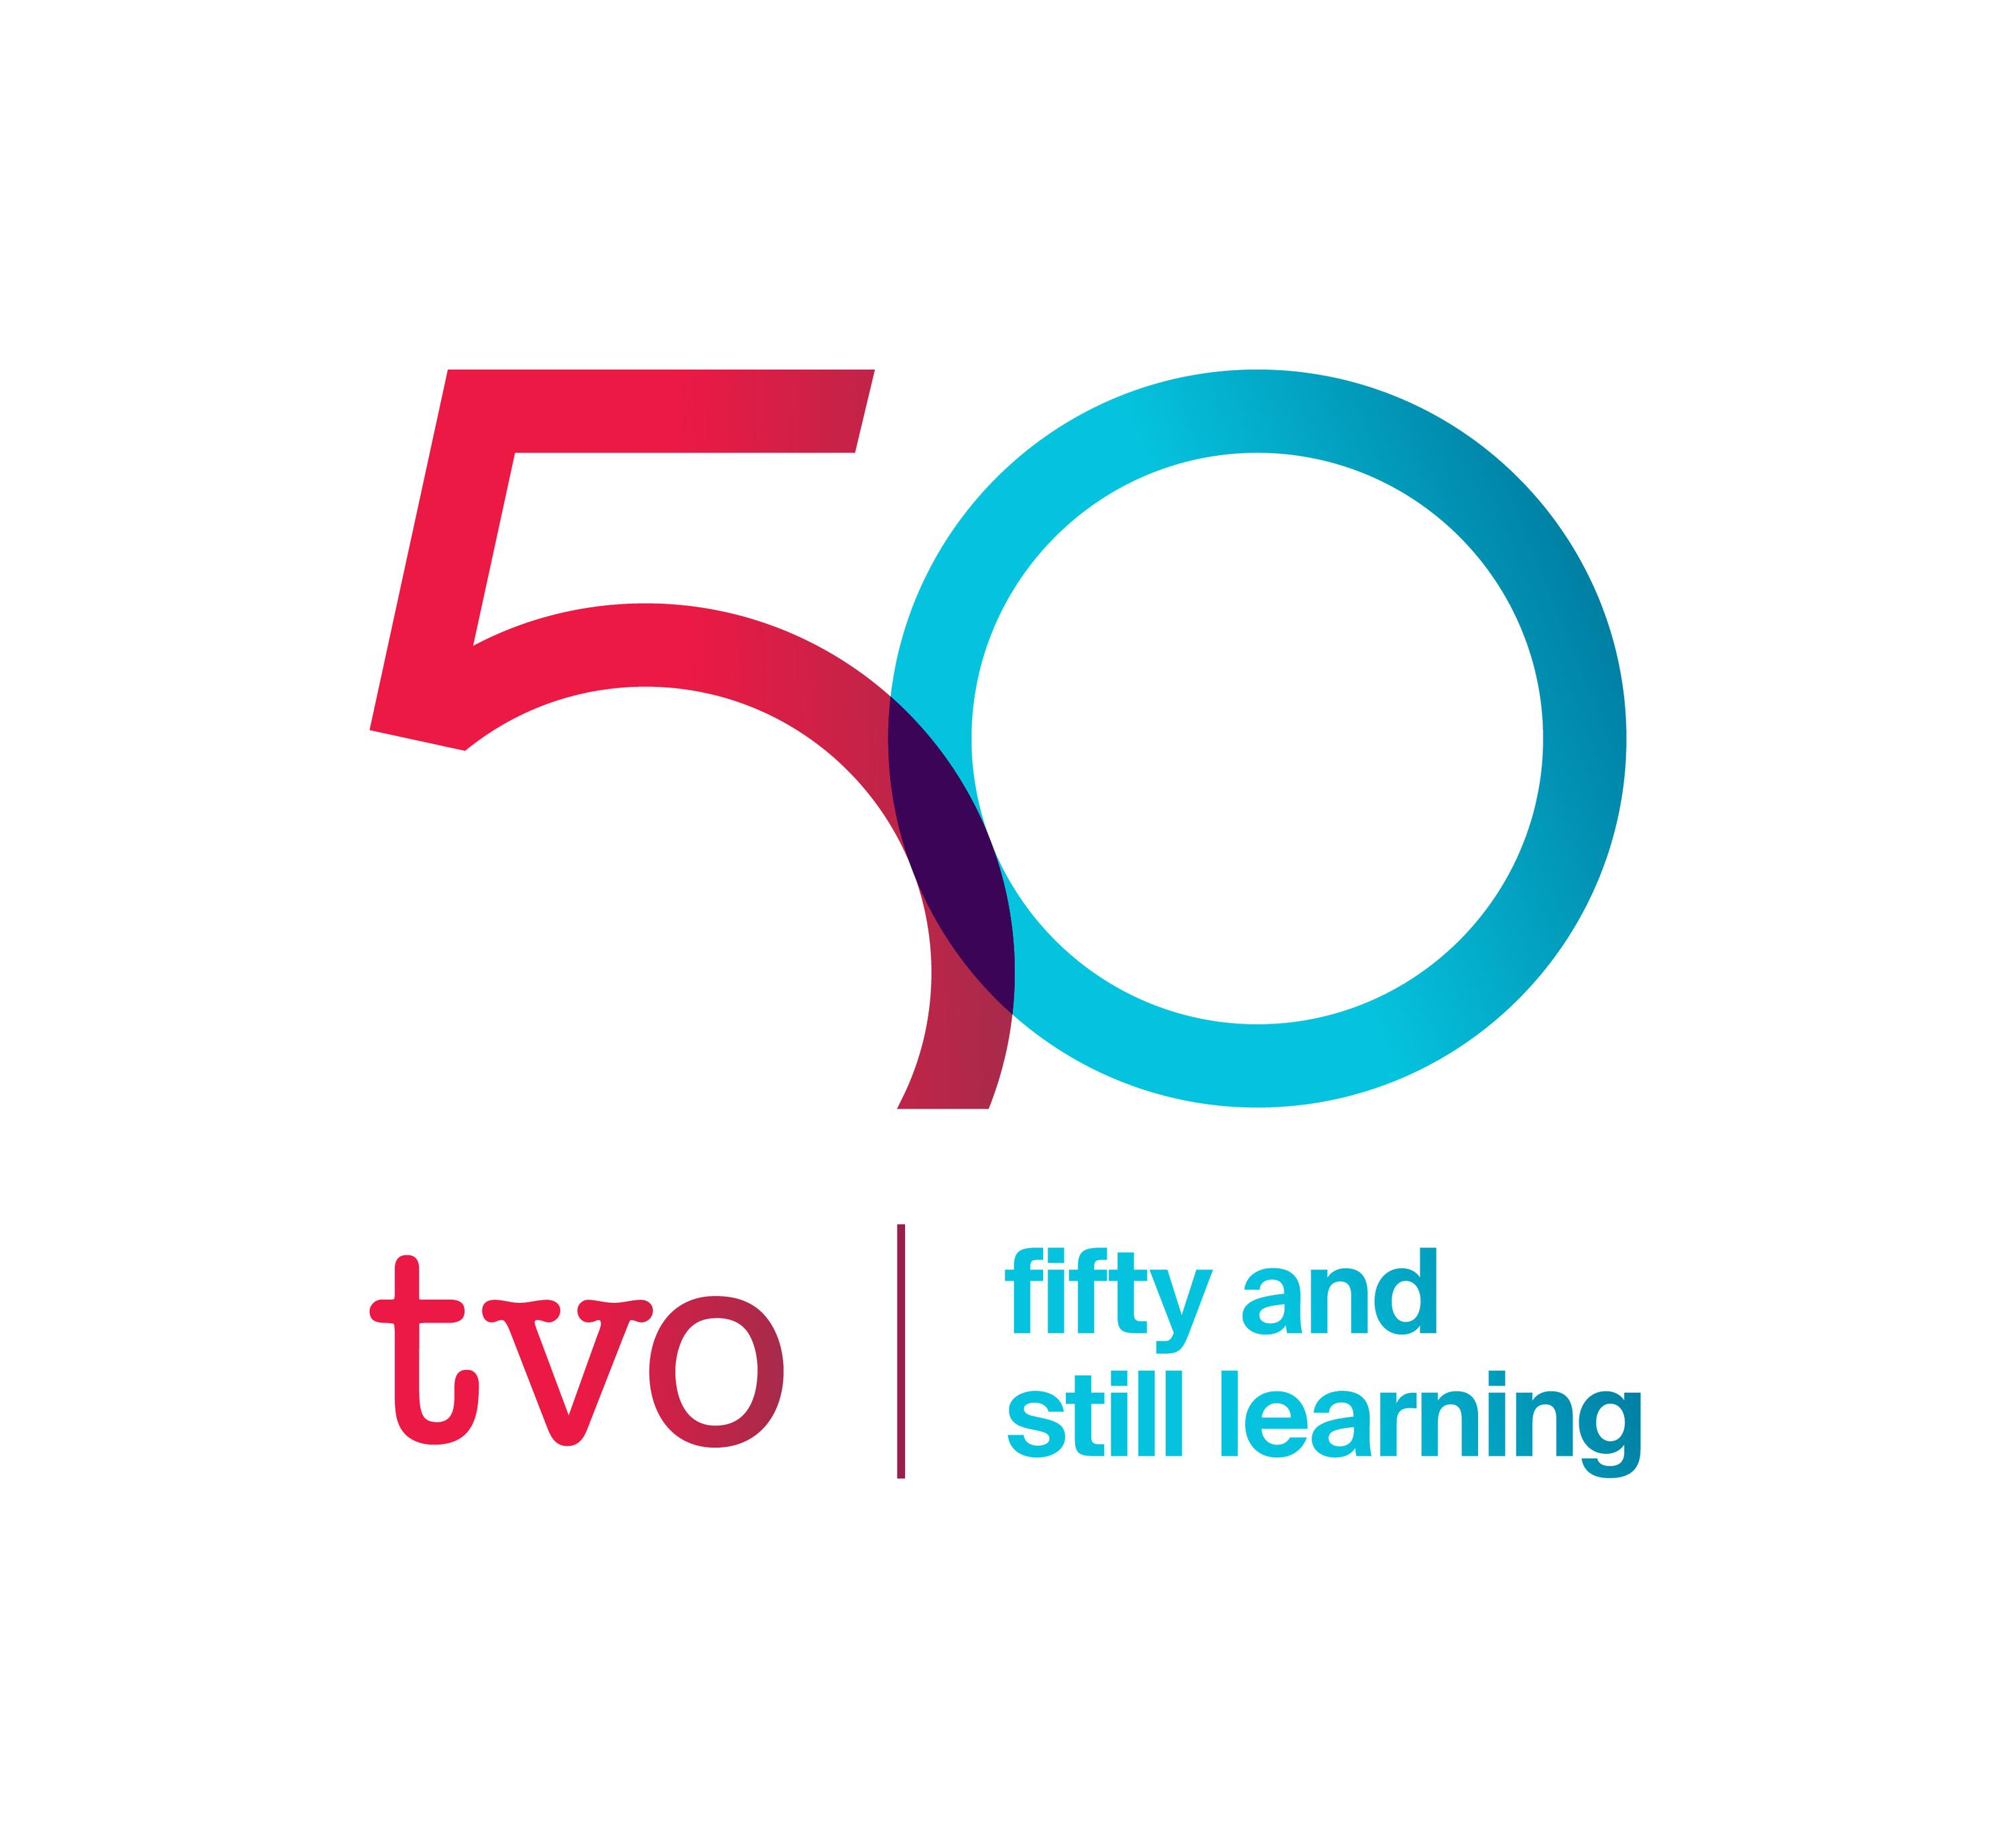 Leading TVO's Digital Transformation